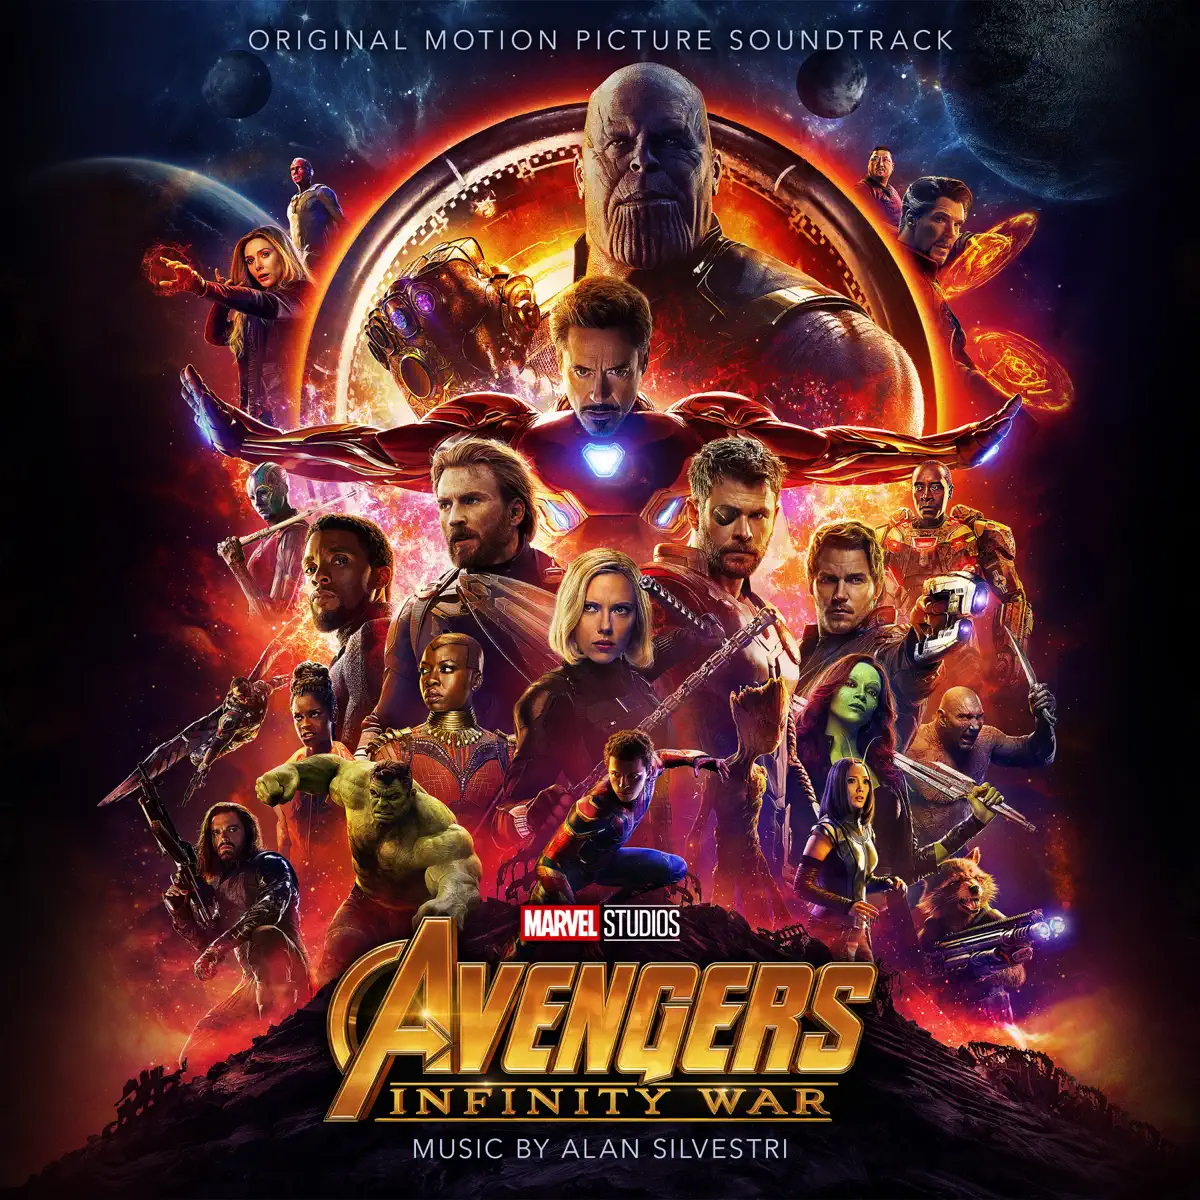 Alan Silvestri - 复仇者联盟3: 无限战争 Avengers: Infinity War (Original Motion Picture Soundtrack) [Deluxe Edition] (2018) [iTunes Plus AAC M4A]-新房子